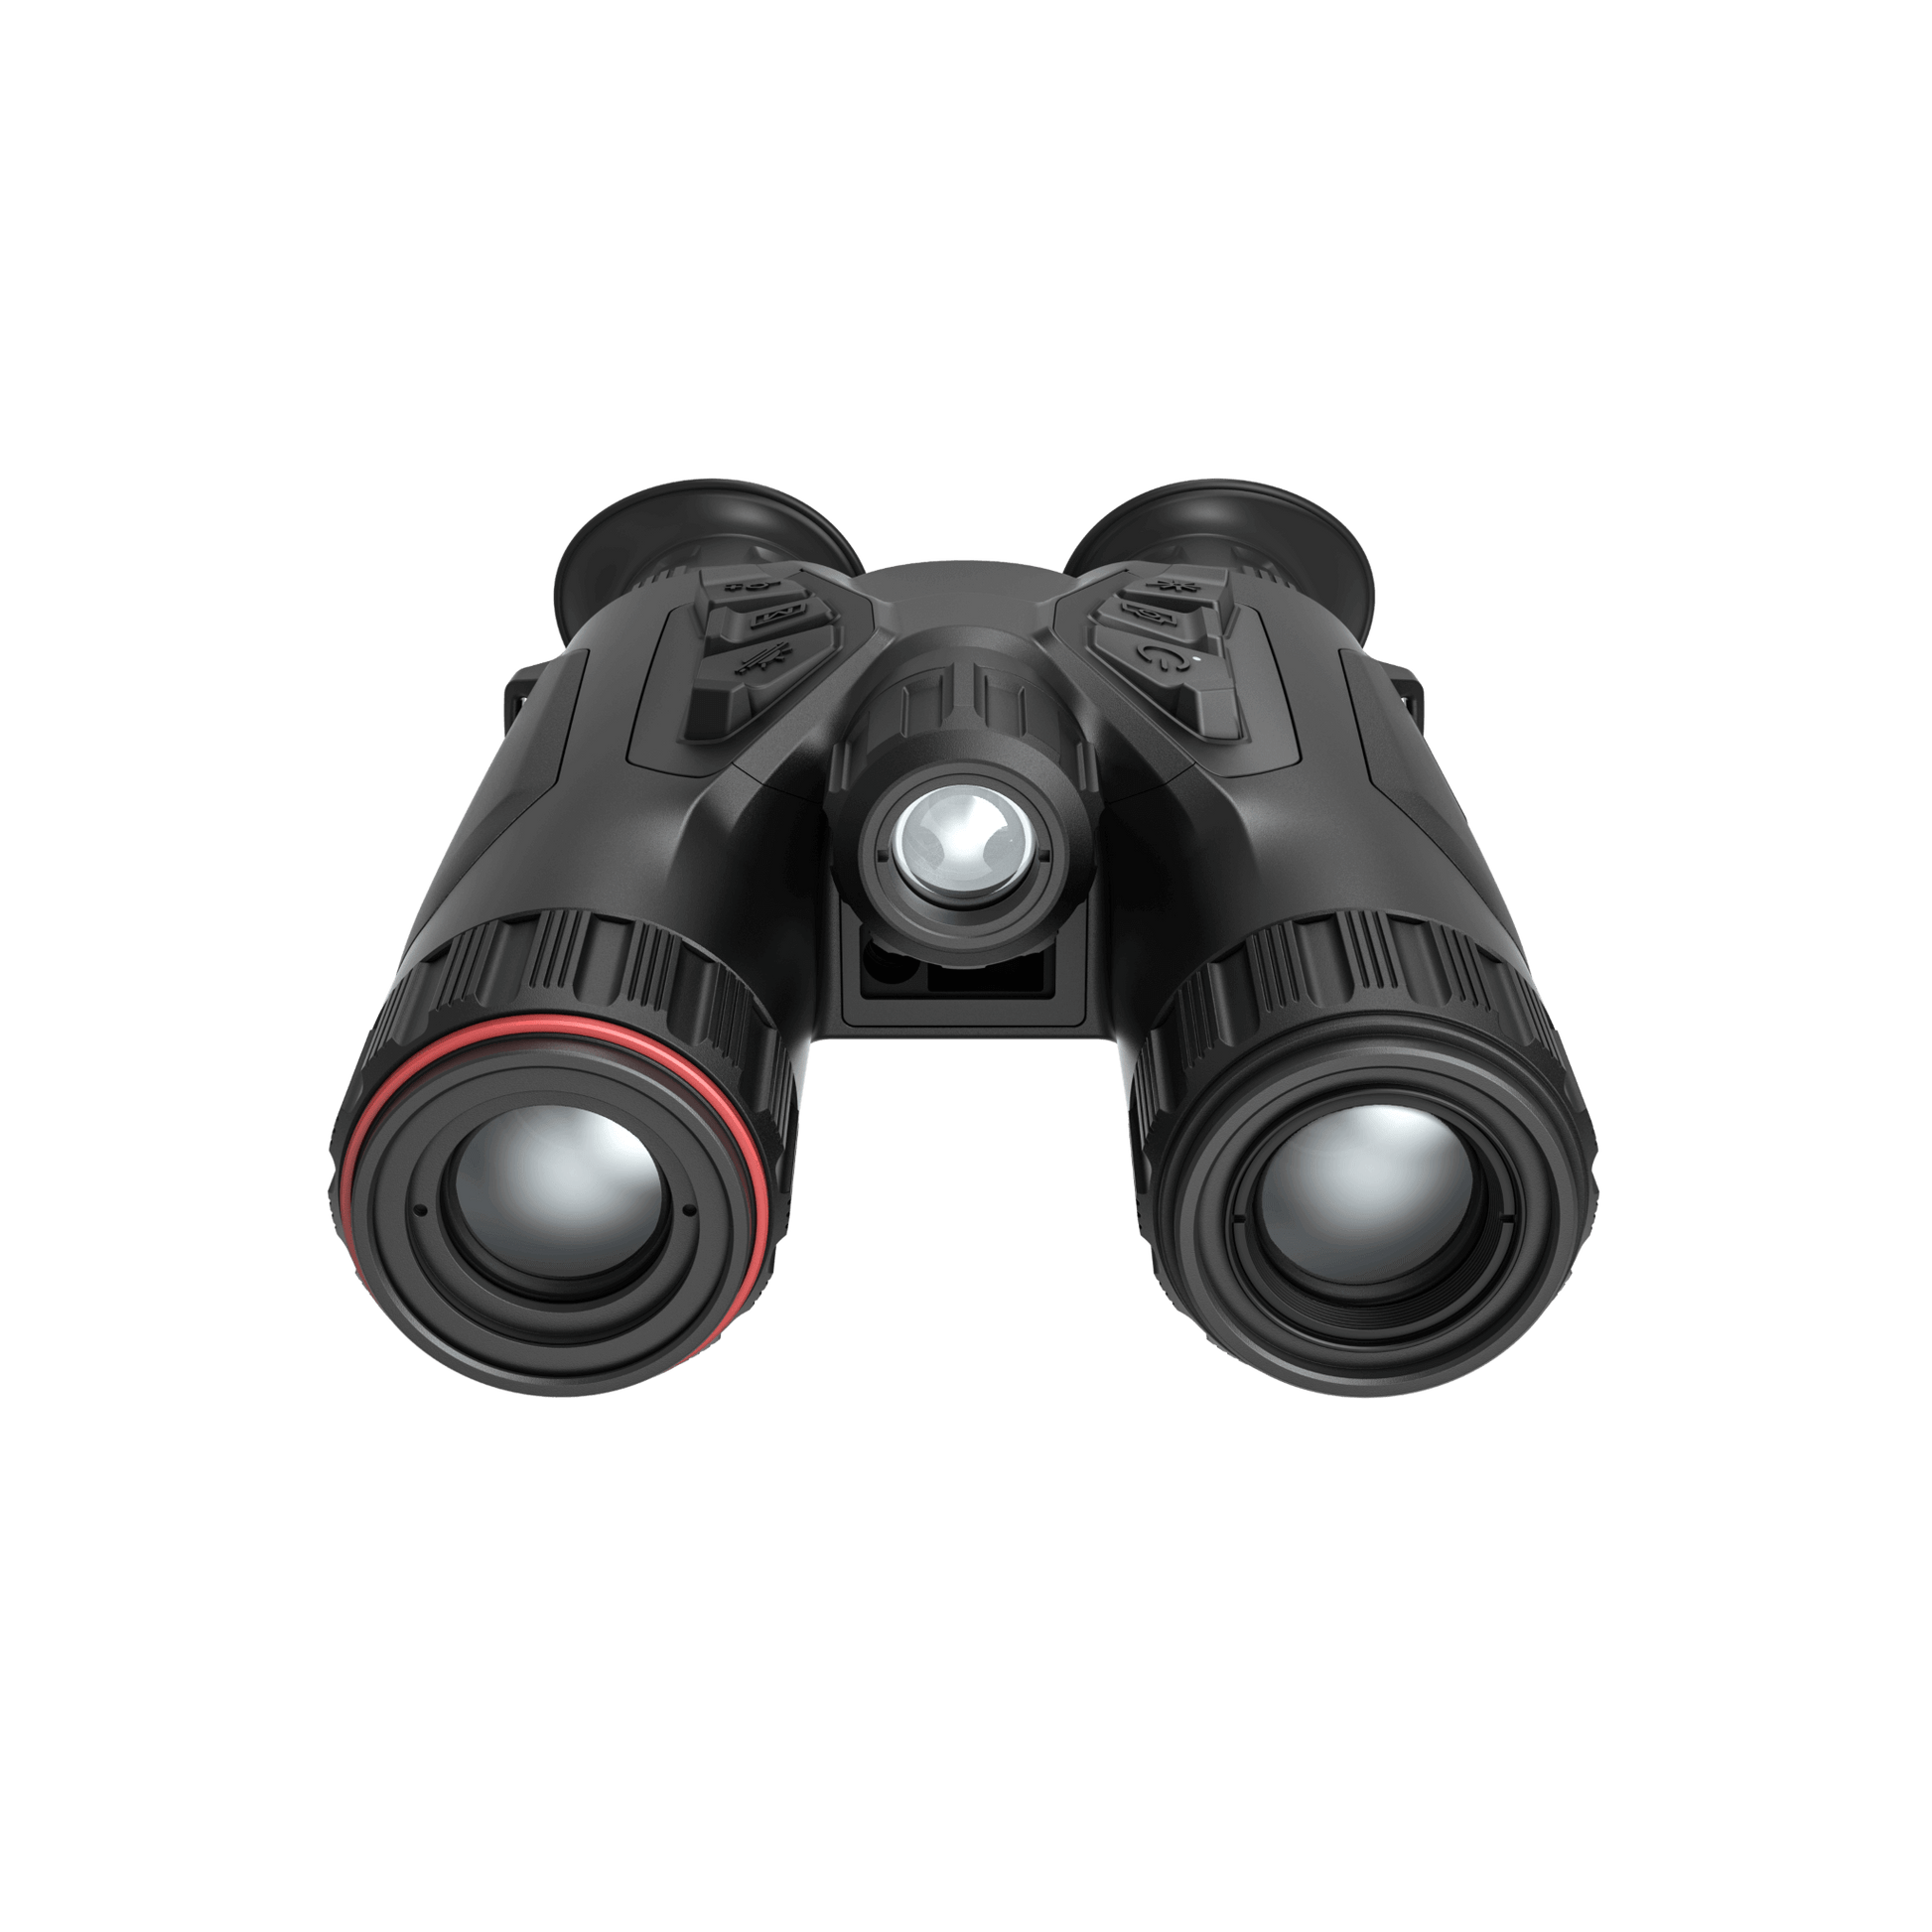 HikMicro Habrok HQ35L Multi-Function Night Vision Thermal Binoculars - Front Lens View